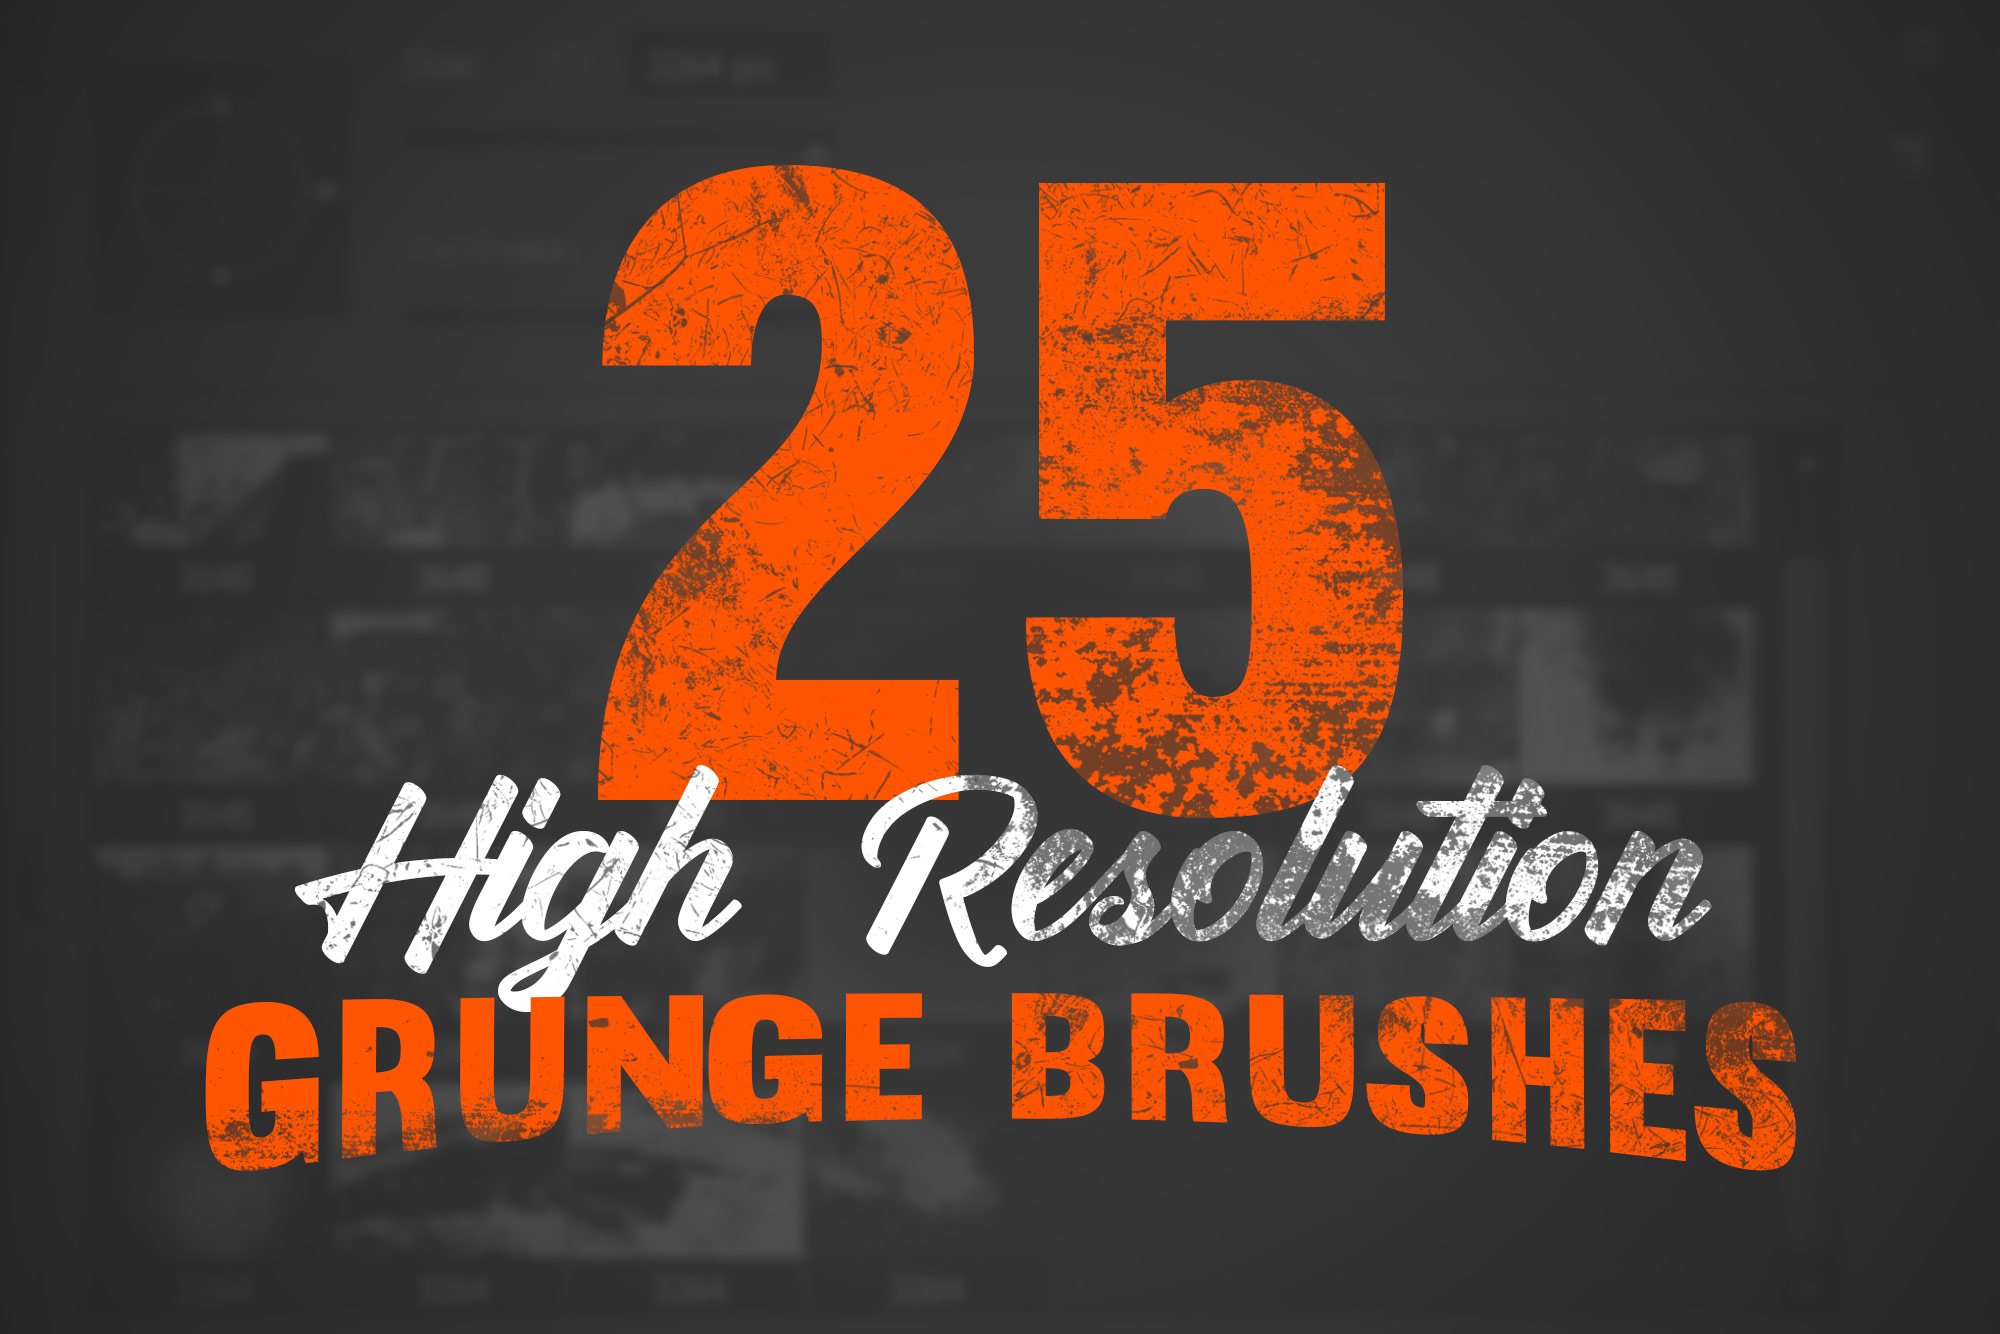 25 High Resolution Grunge Brushescover image.